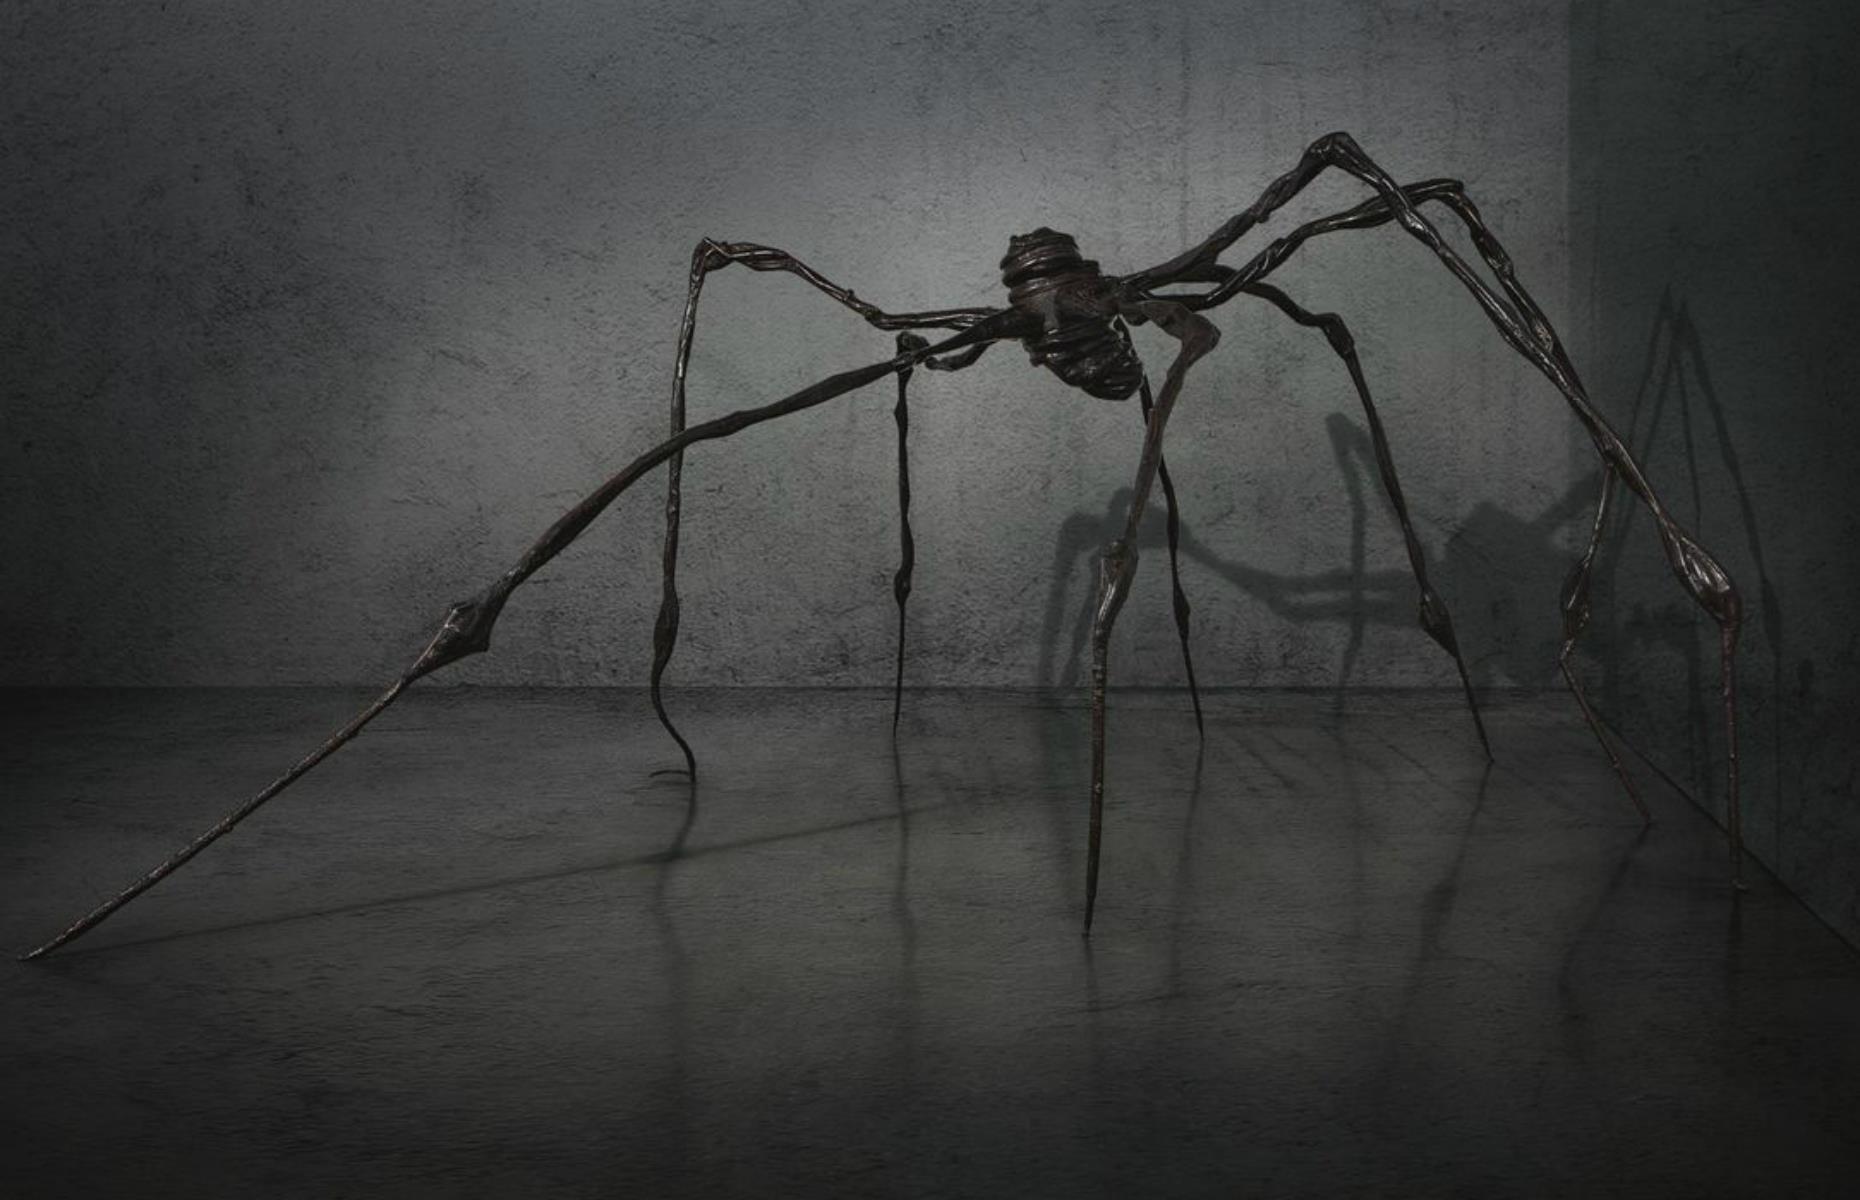 Louise Bourgeois' Spider – $32 million (£25.2m)